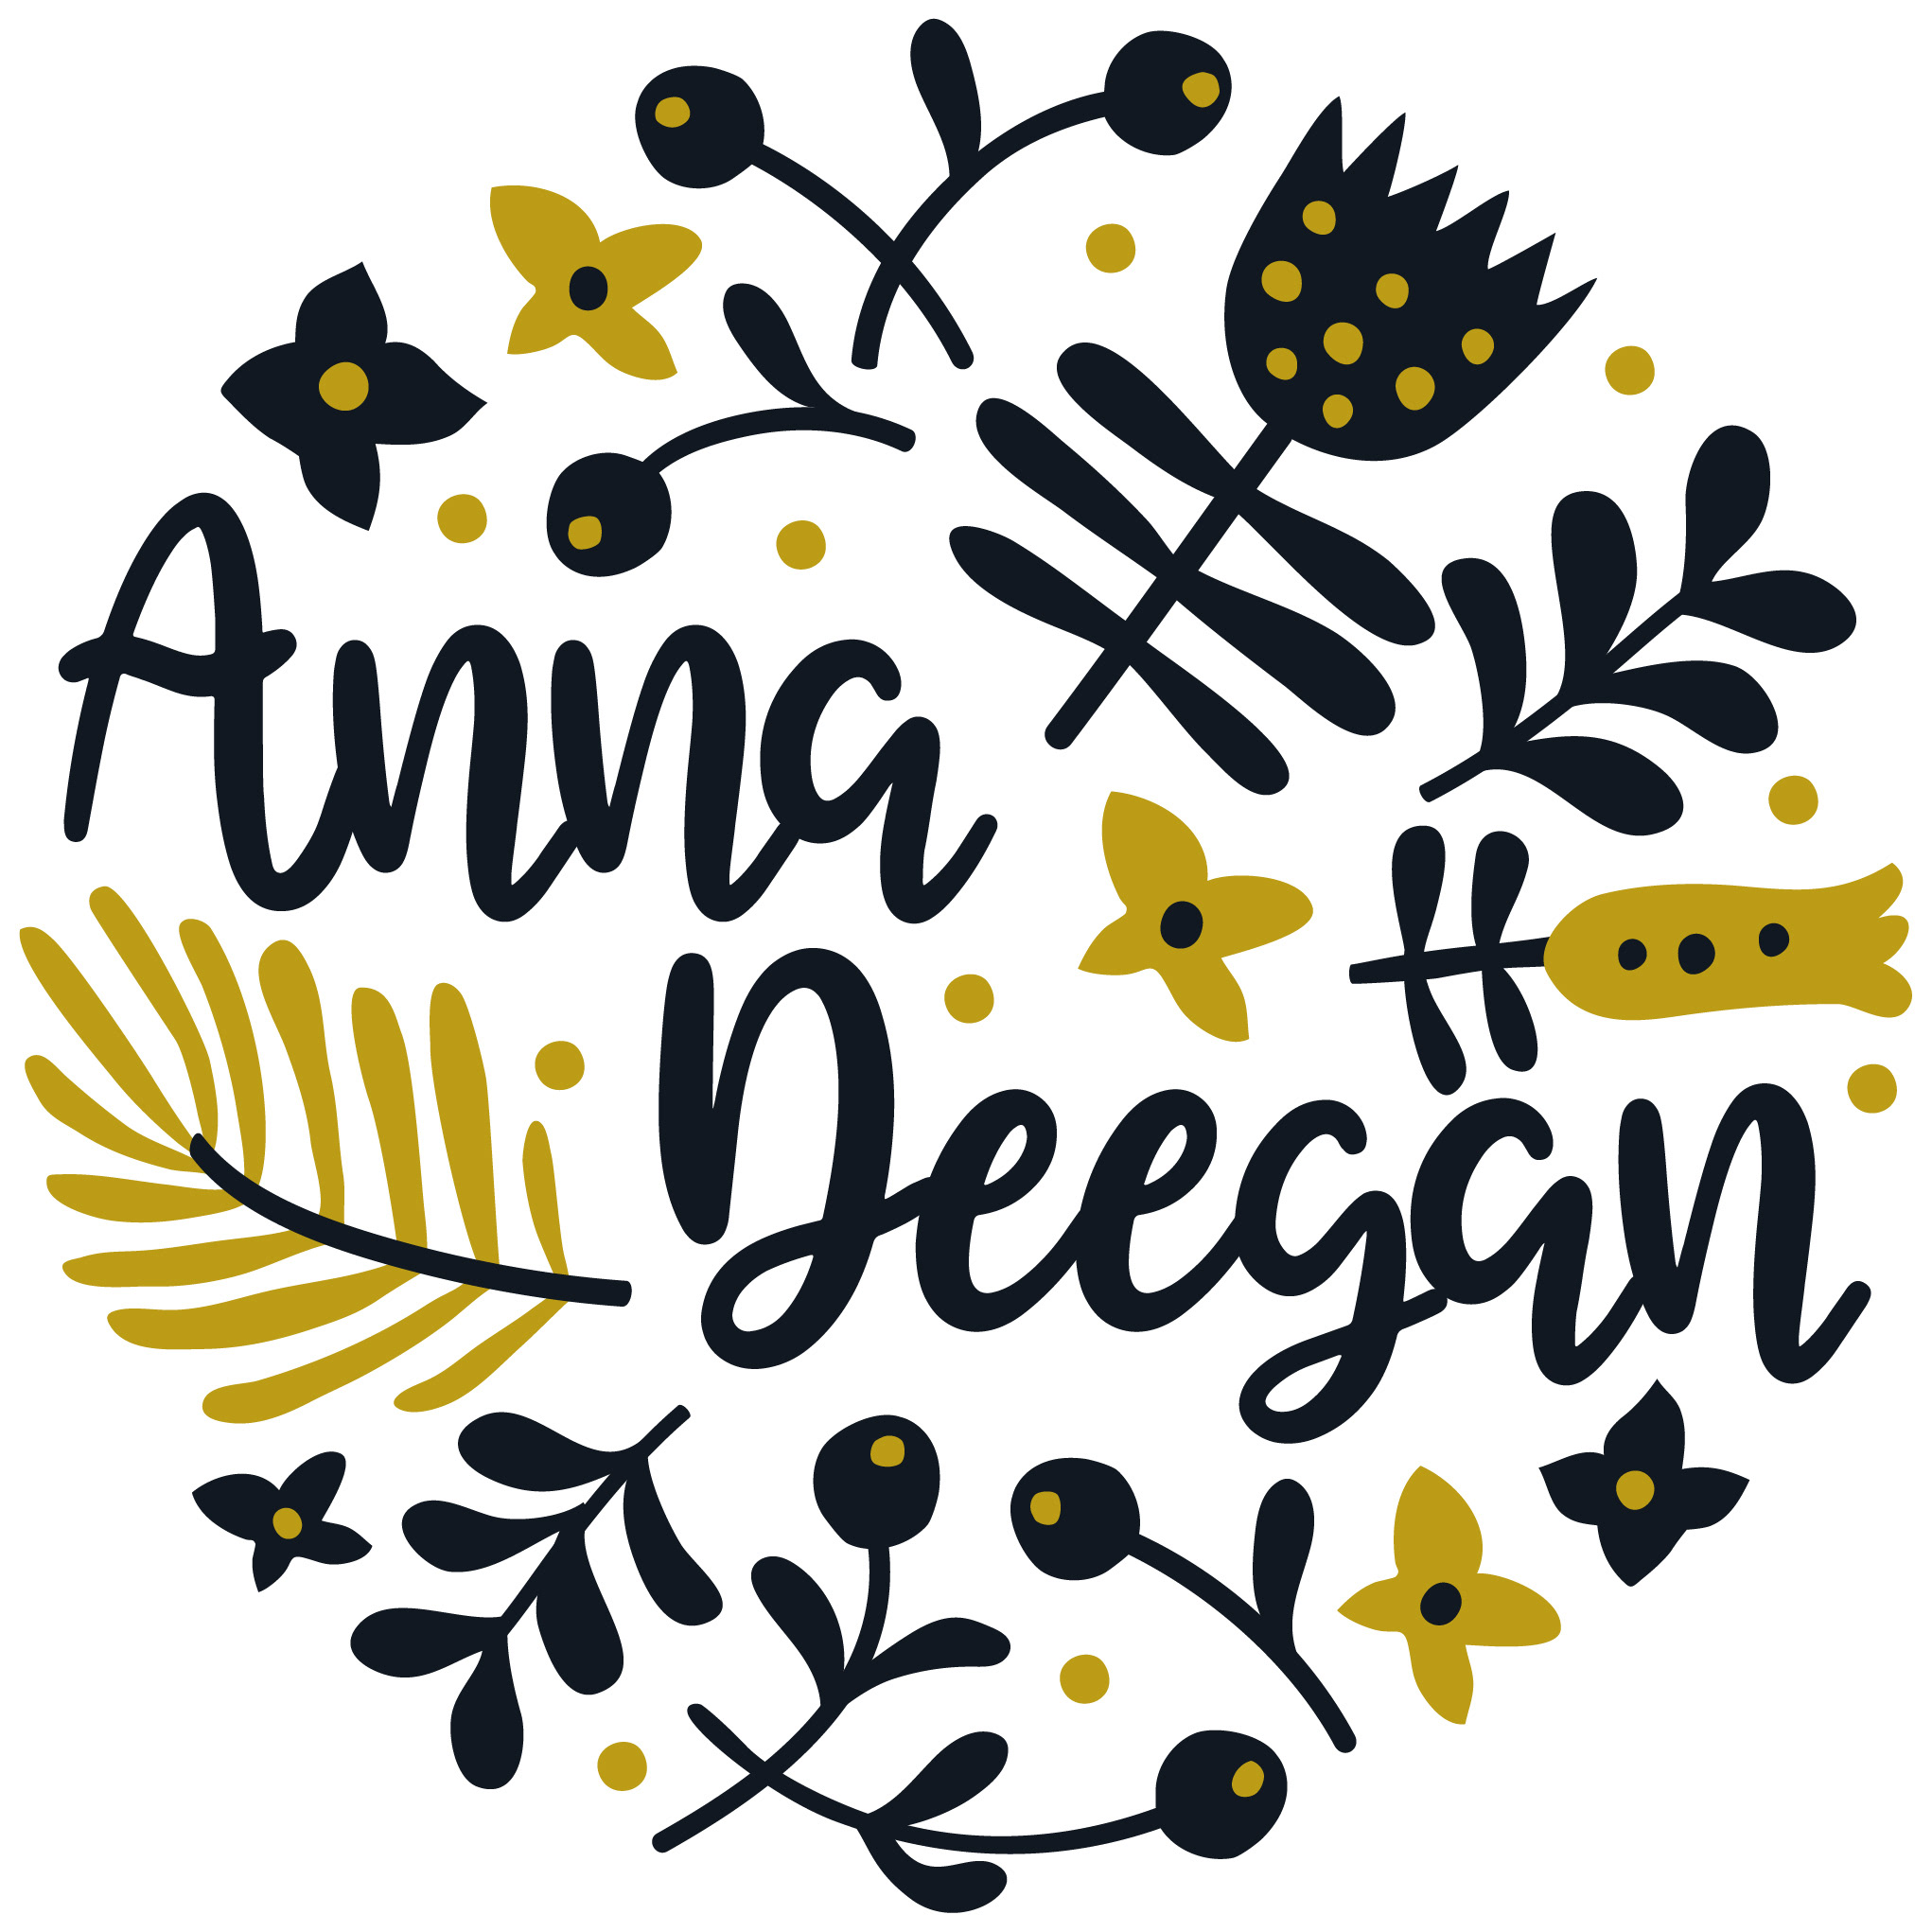 anna deegan